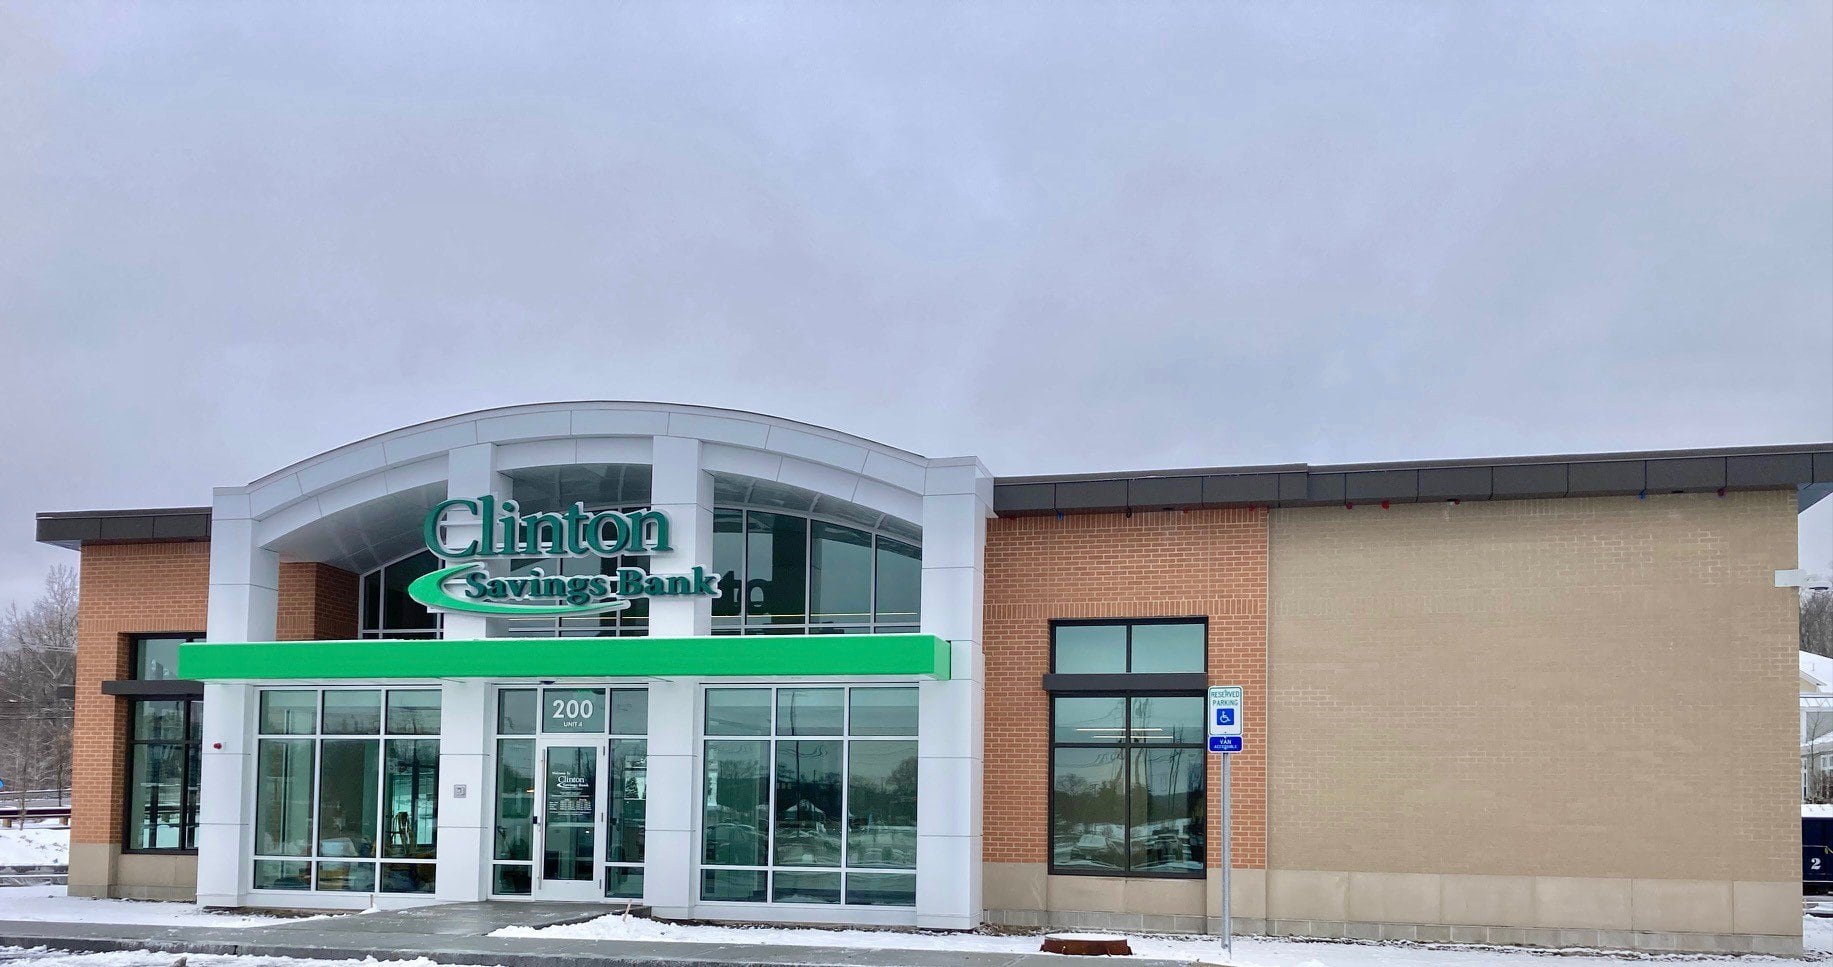 Clinton Savings Bank opens seventh branch in Shrewsbury